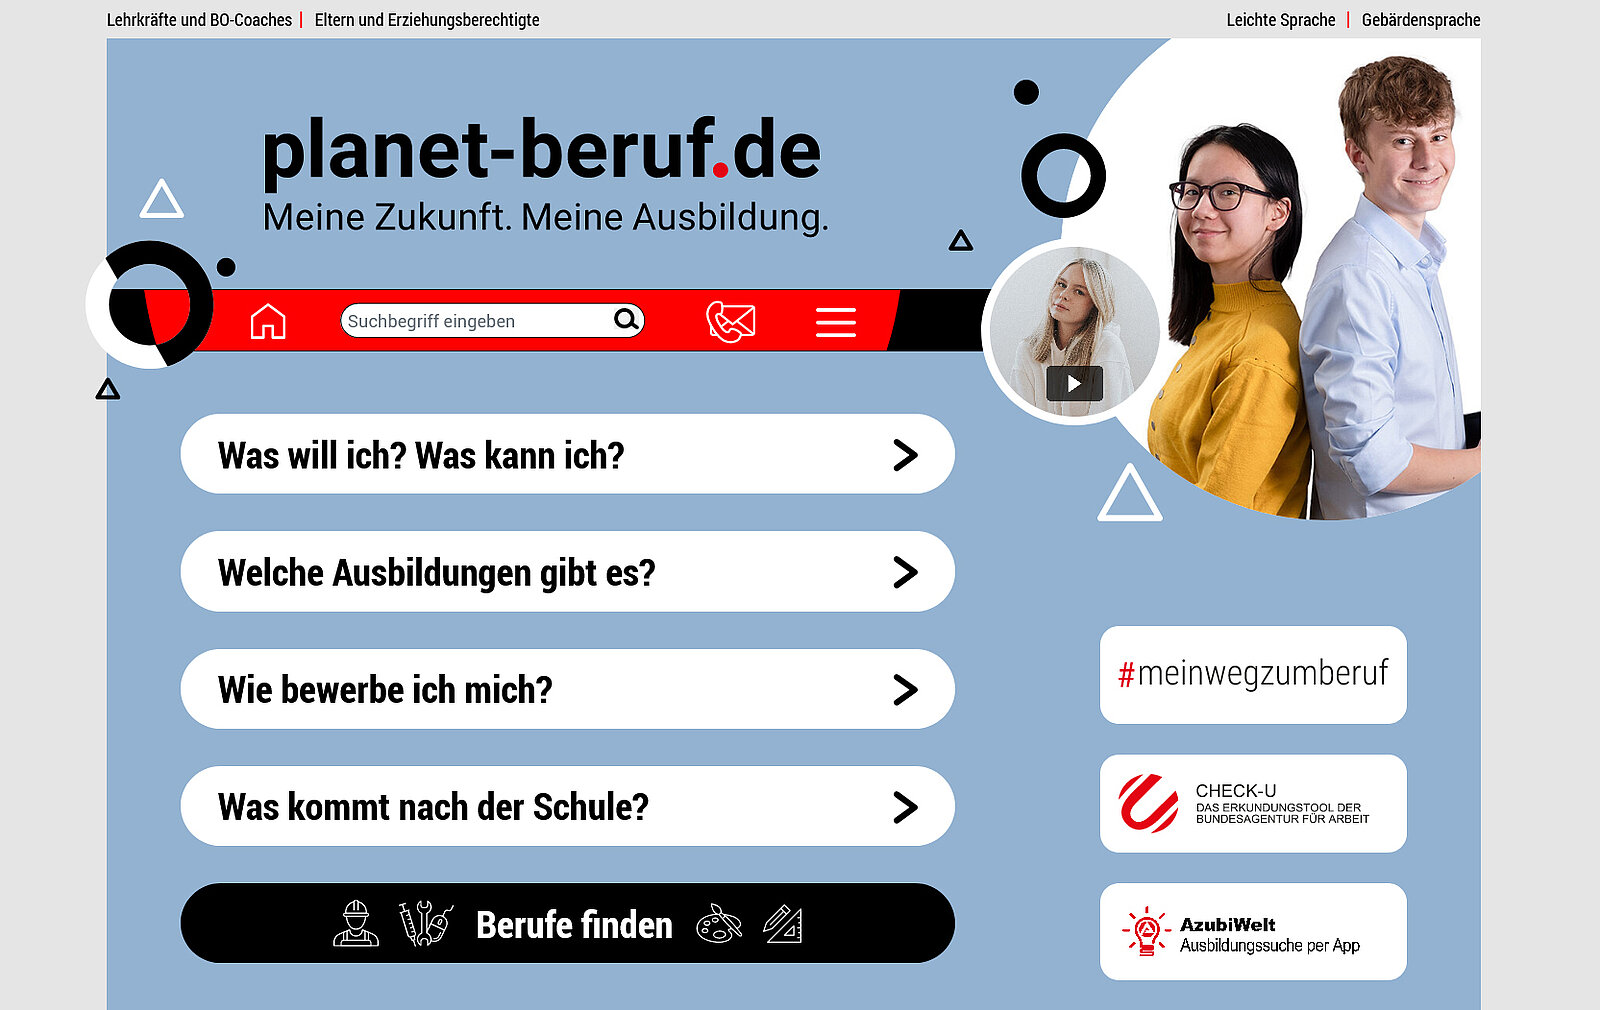 Portalvorschau von planet-beruf.de.